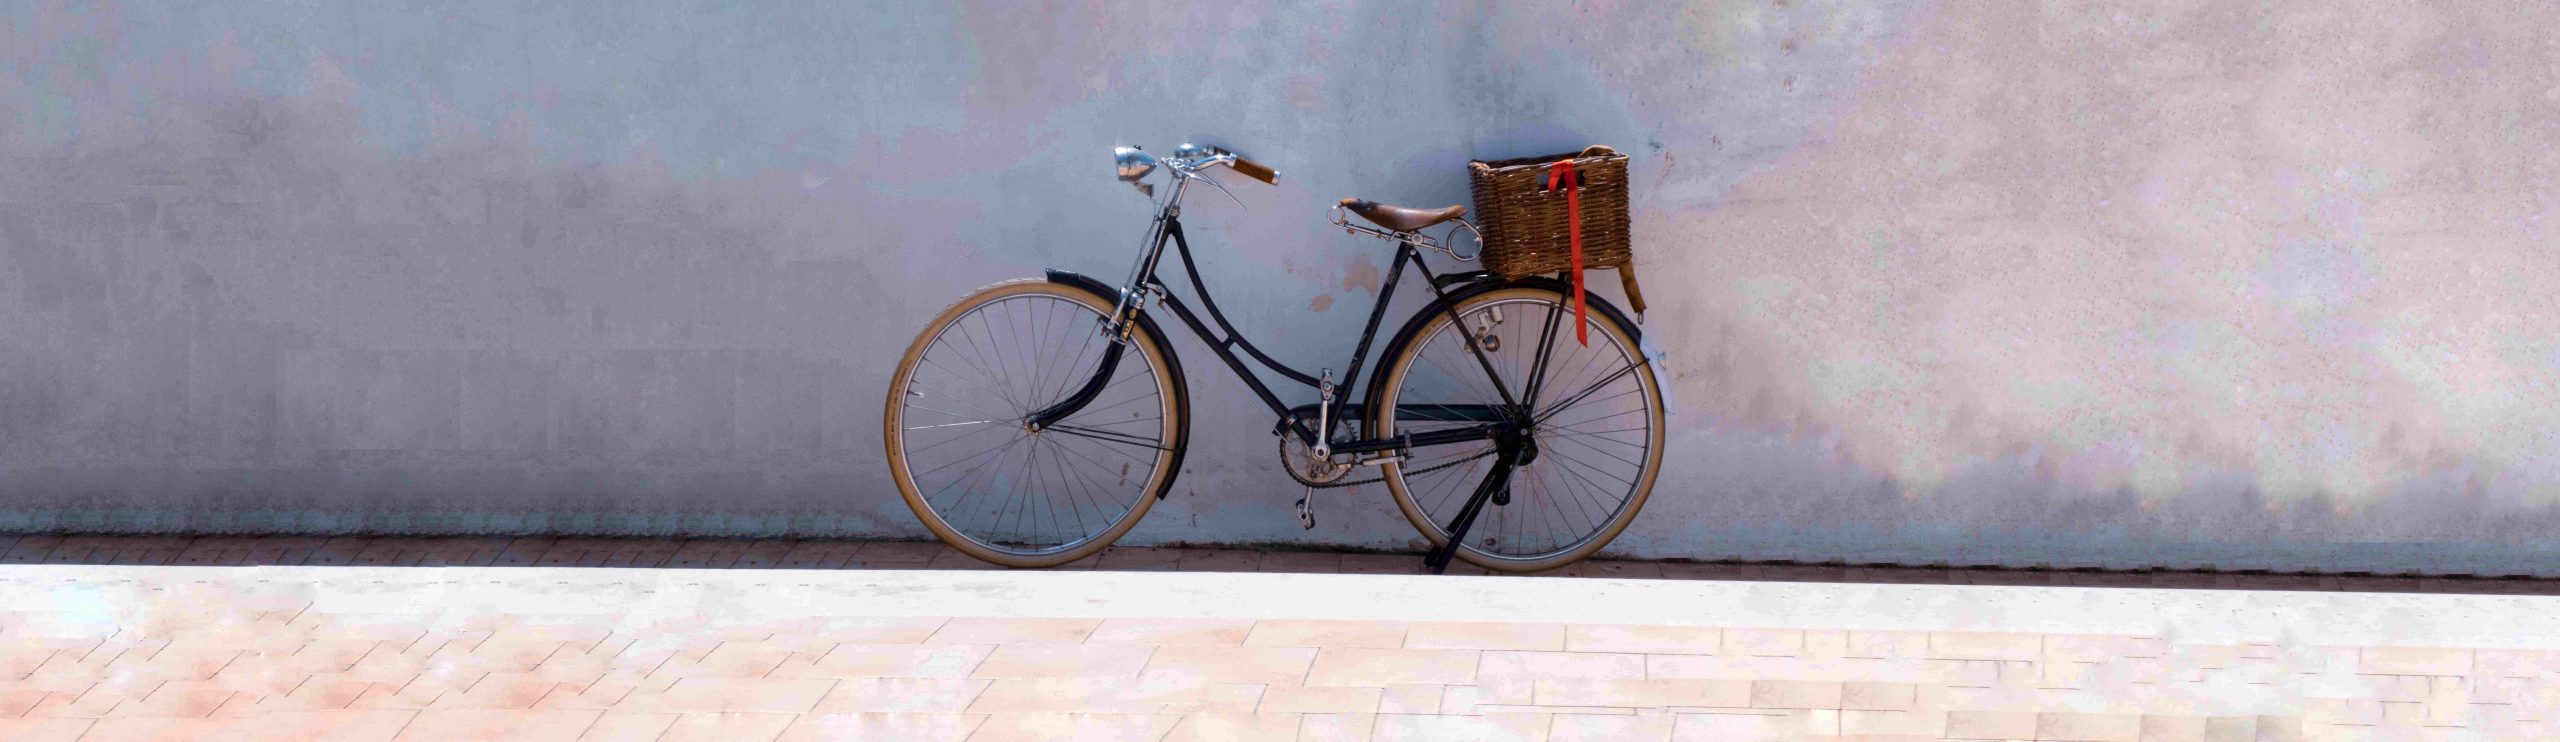 vélo ancien contre un mur